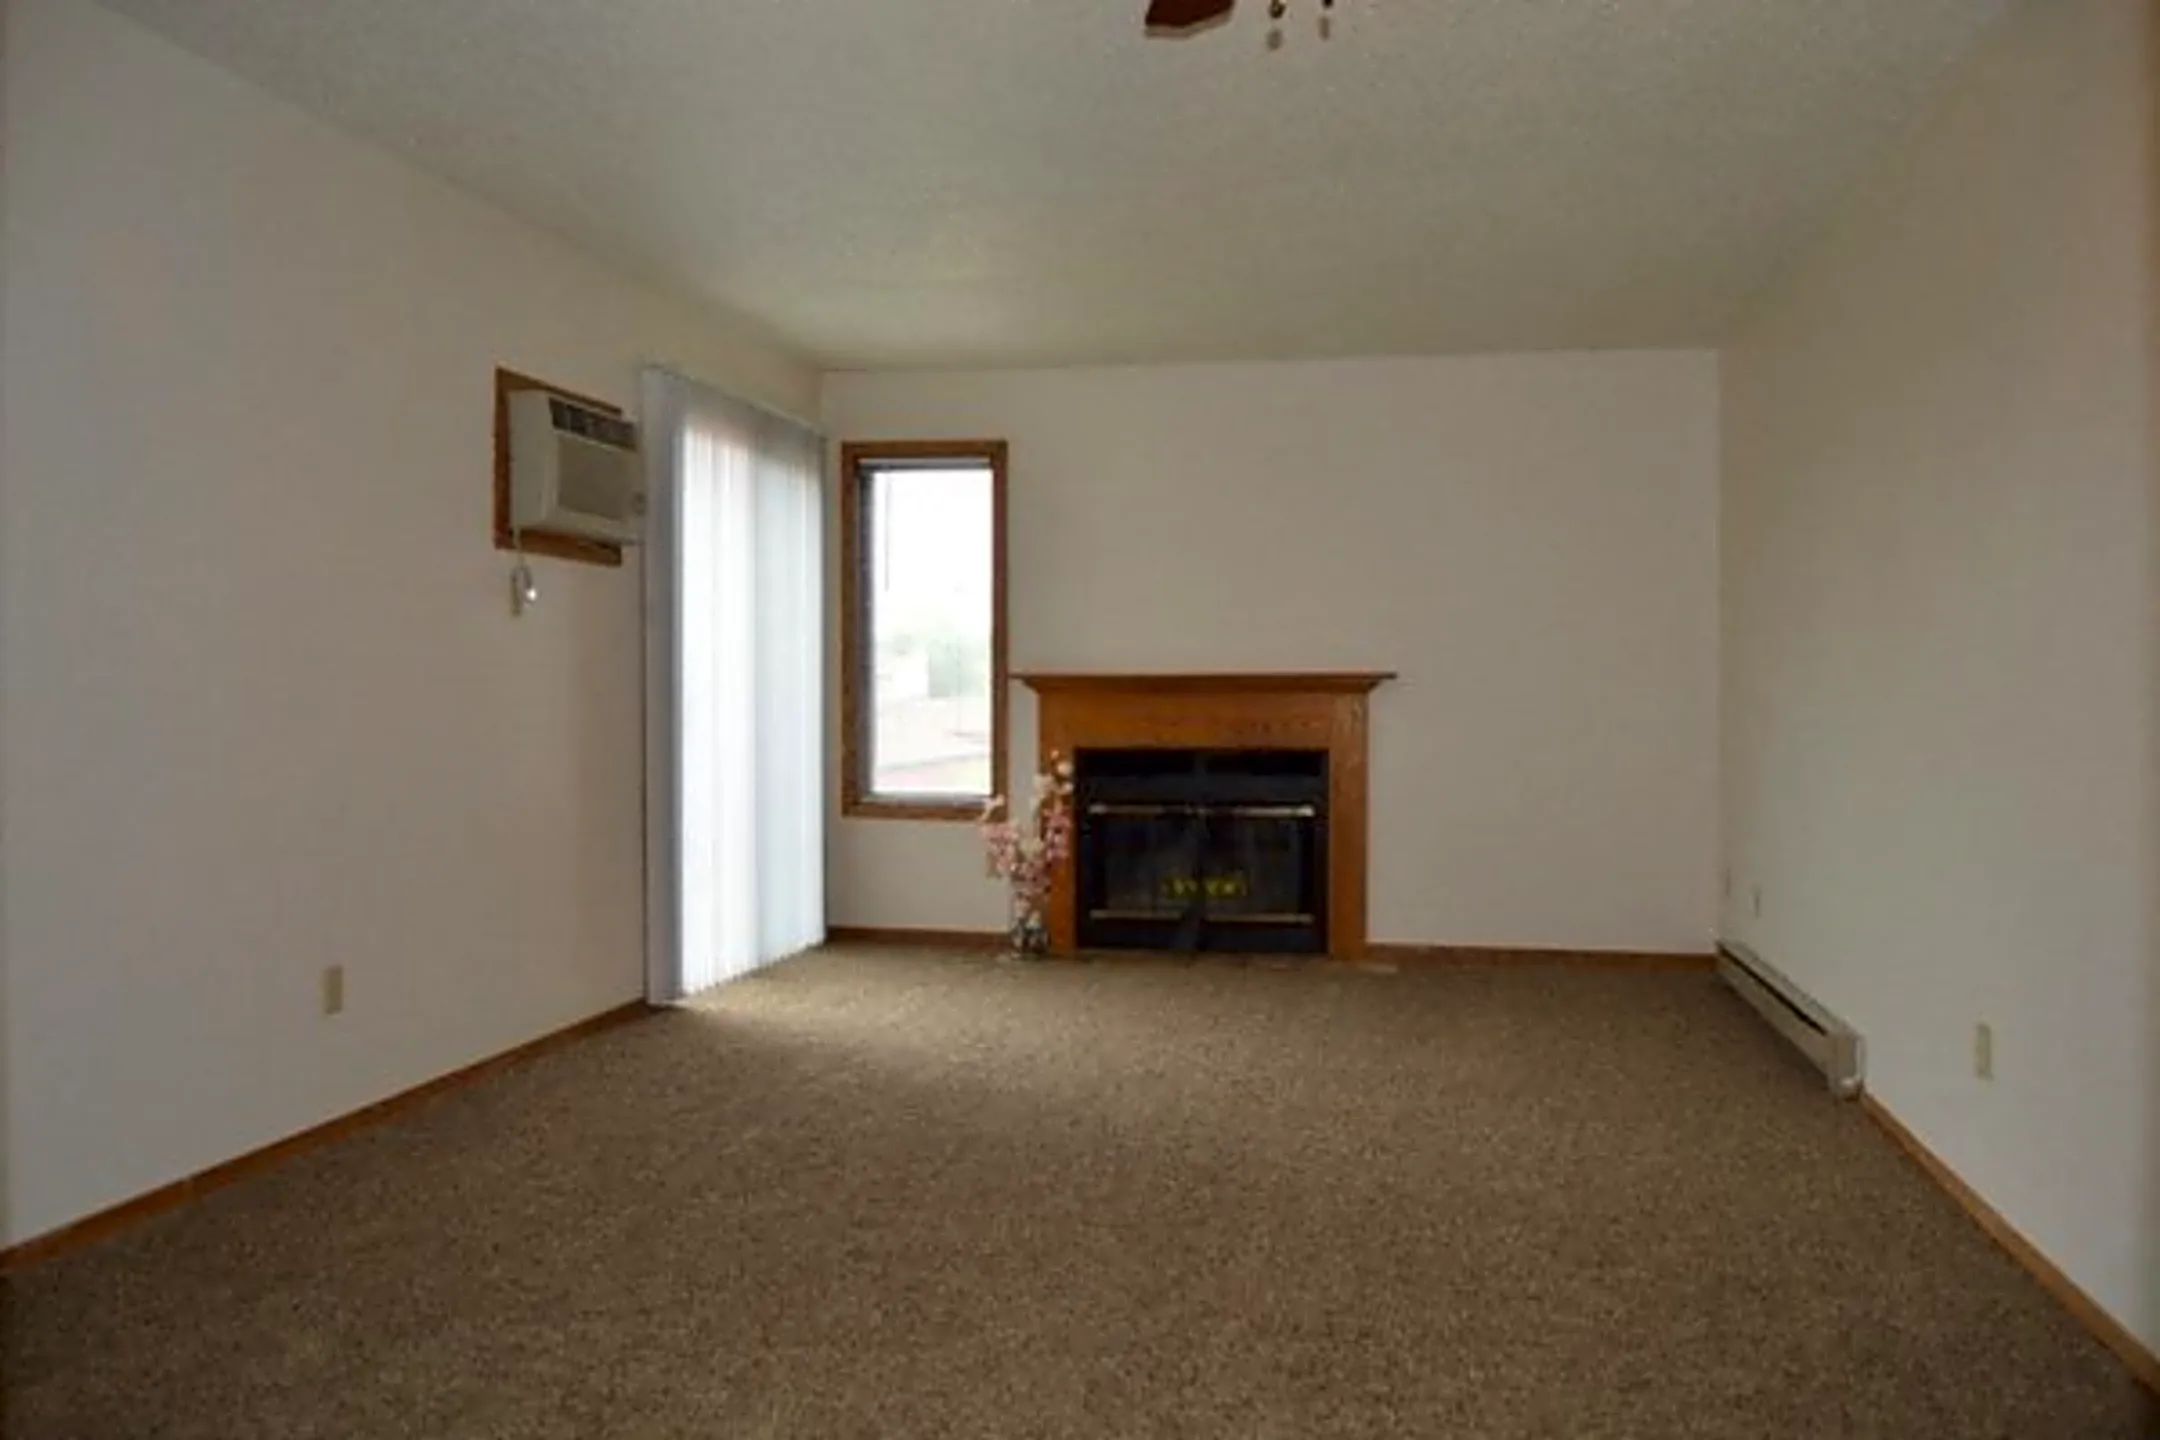 Living Room - Kentwood Manor Office - Fargo, ND